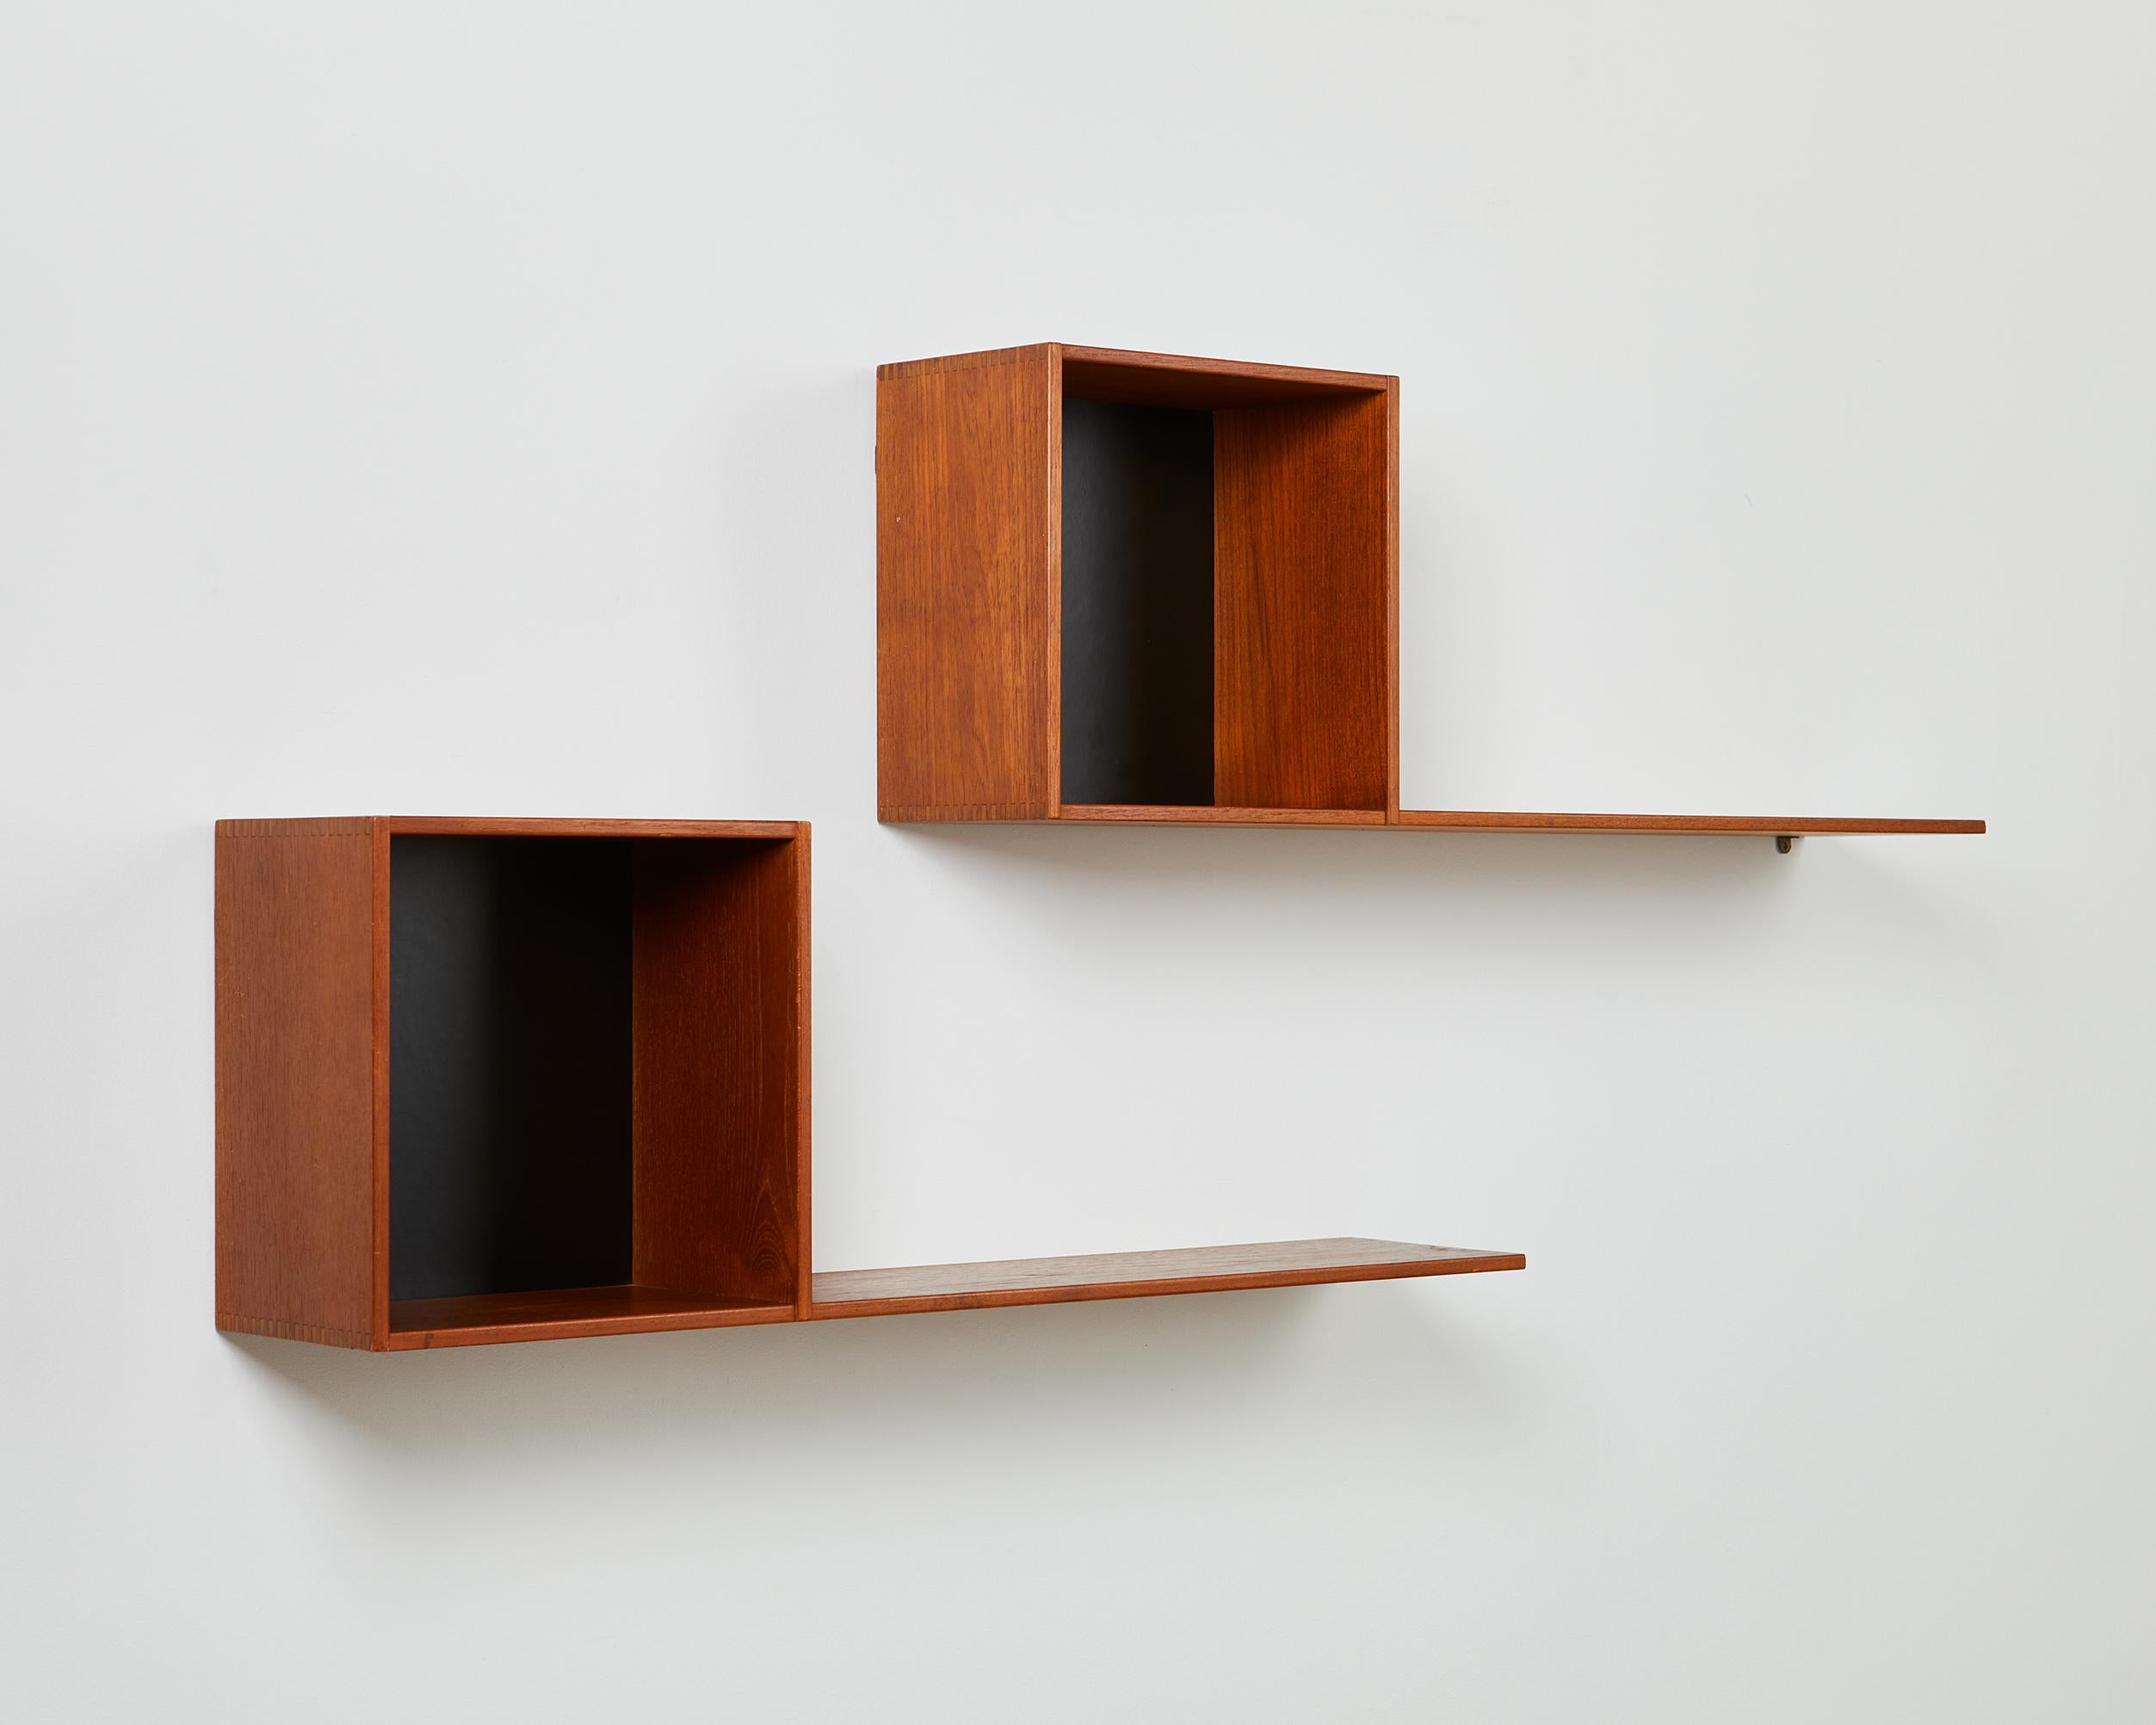 Pair of wall shelves, anonymous,
Sweden, 1950s.

Teak.

Dimensions:
H: 30 cm / 11 3/4